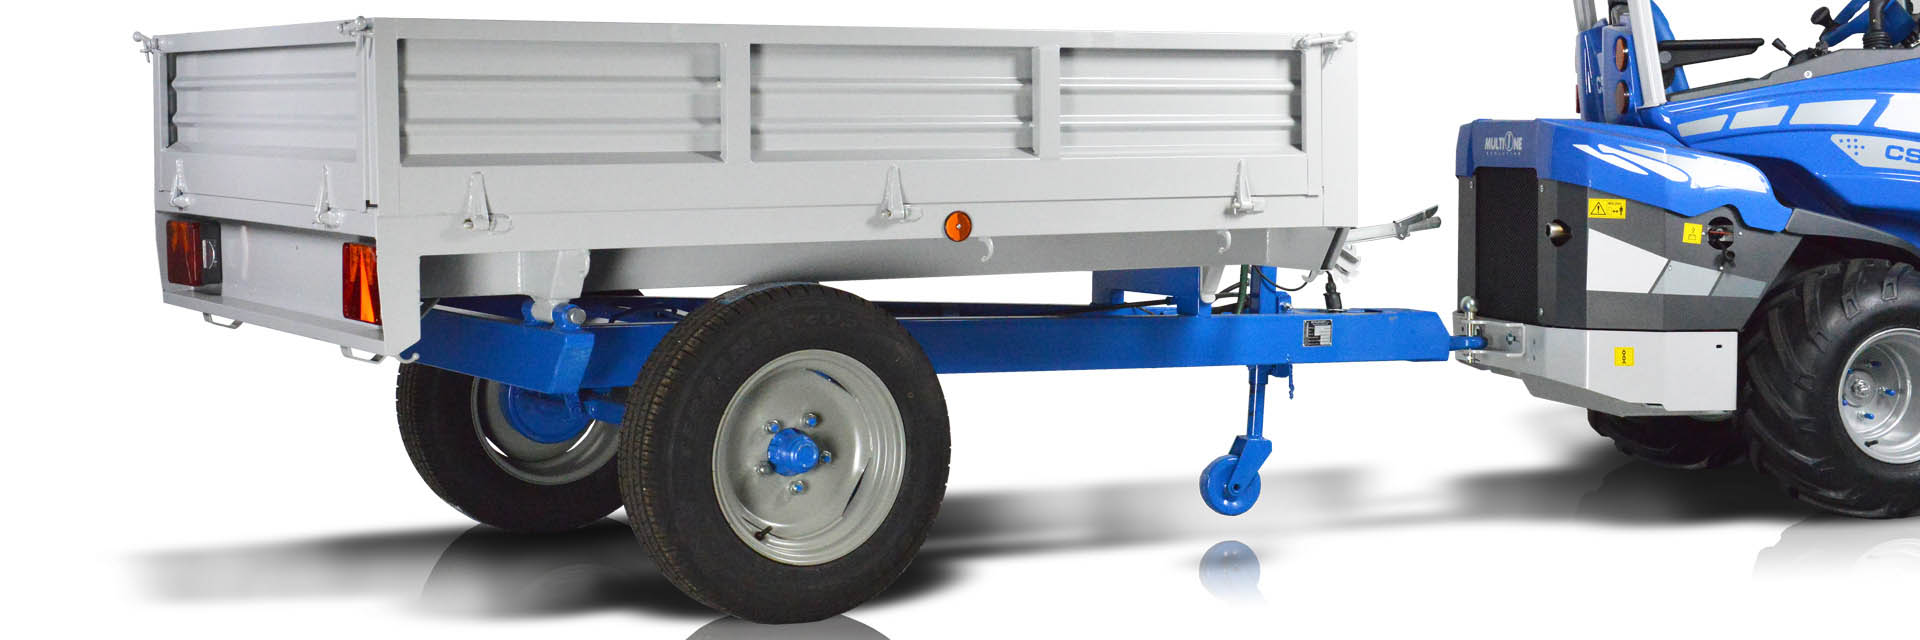 Multione-trailer for mini loader